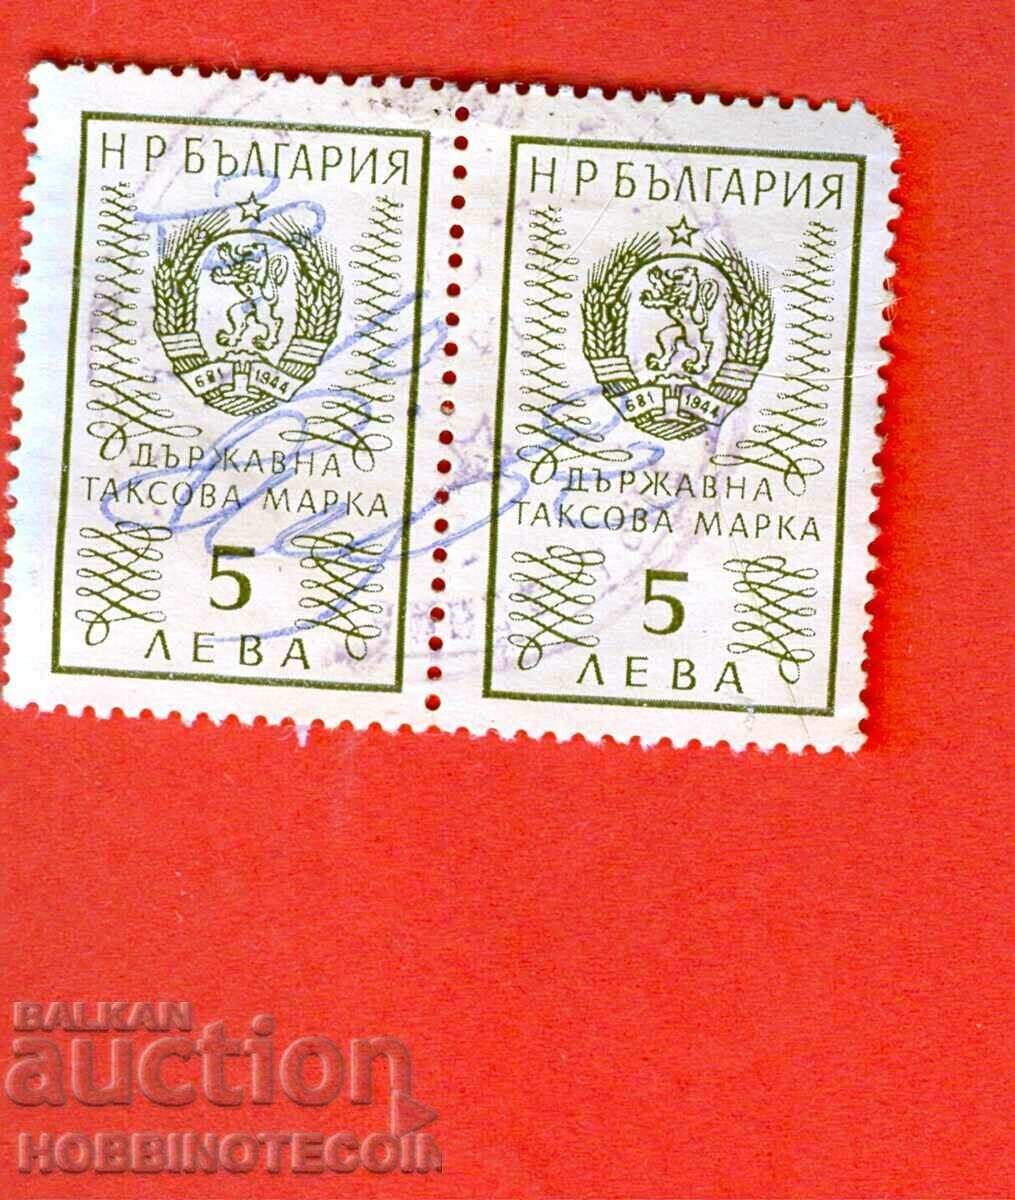 NR BULGARIA STATE TAX STAMP 2 x 5,00 - 5 BGN - 1972